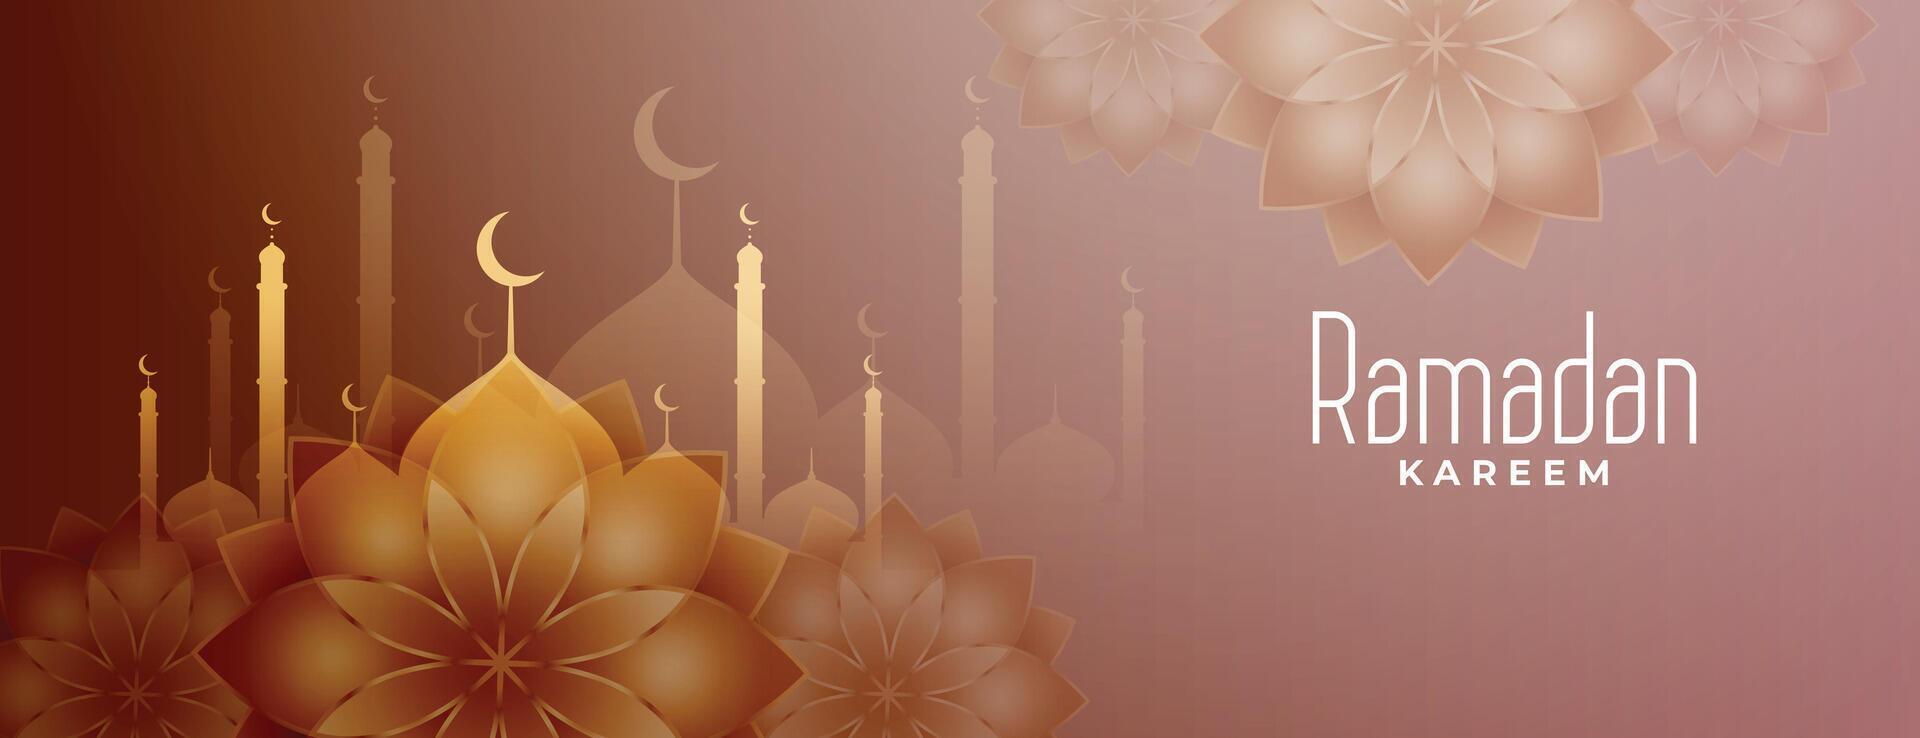 ramadan månad islamic dekorativ baner design vektor